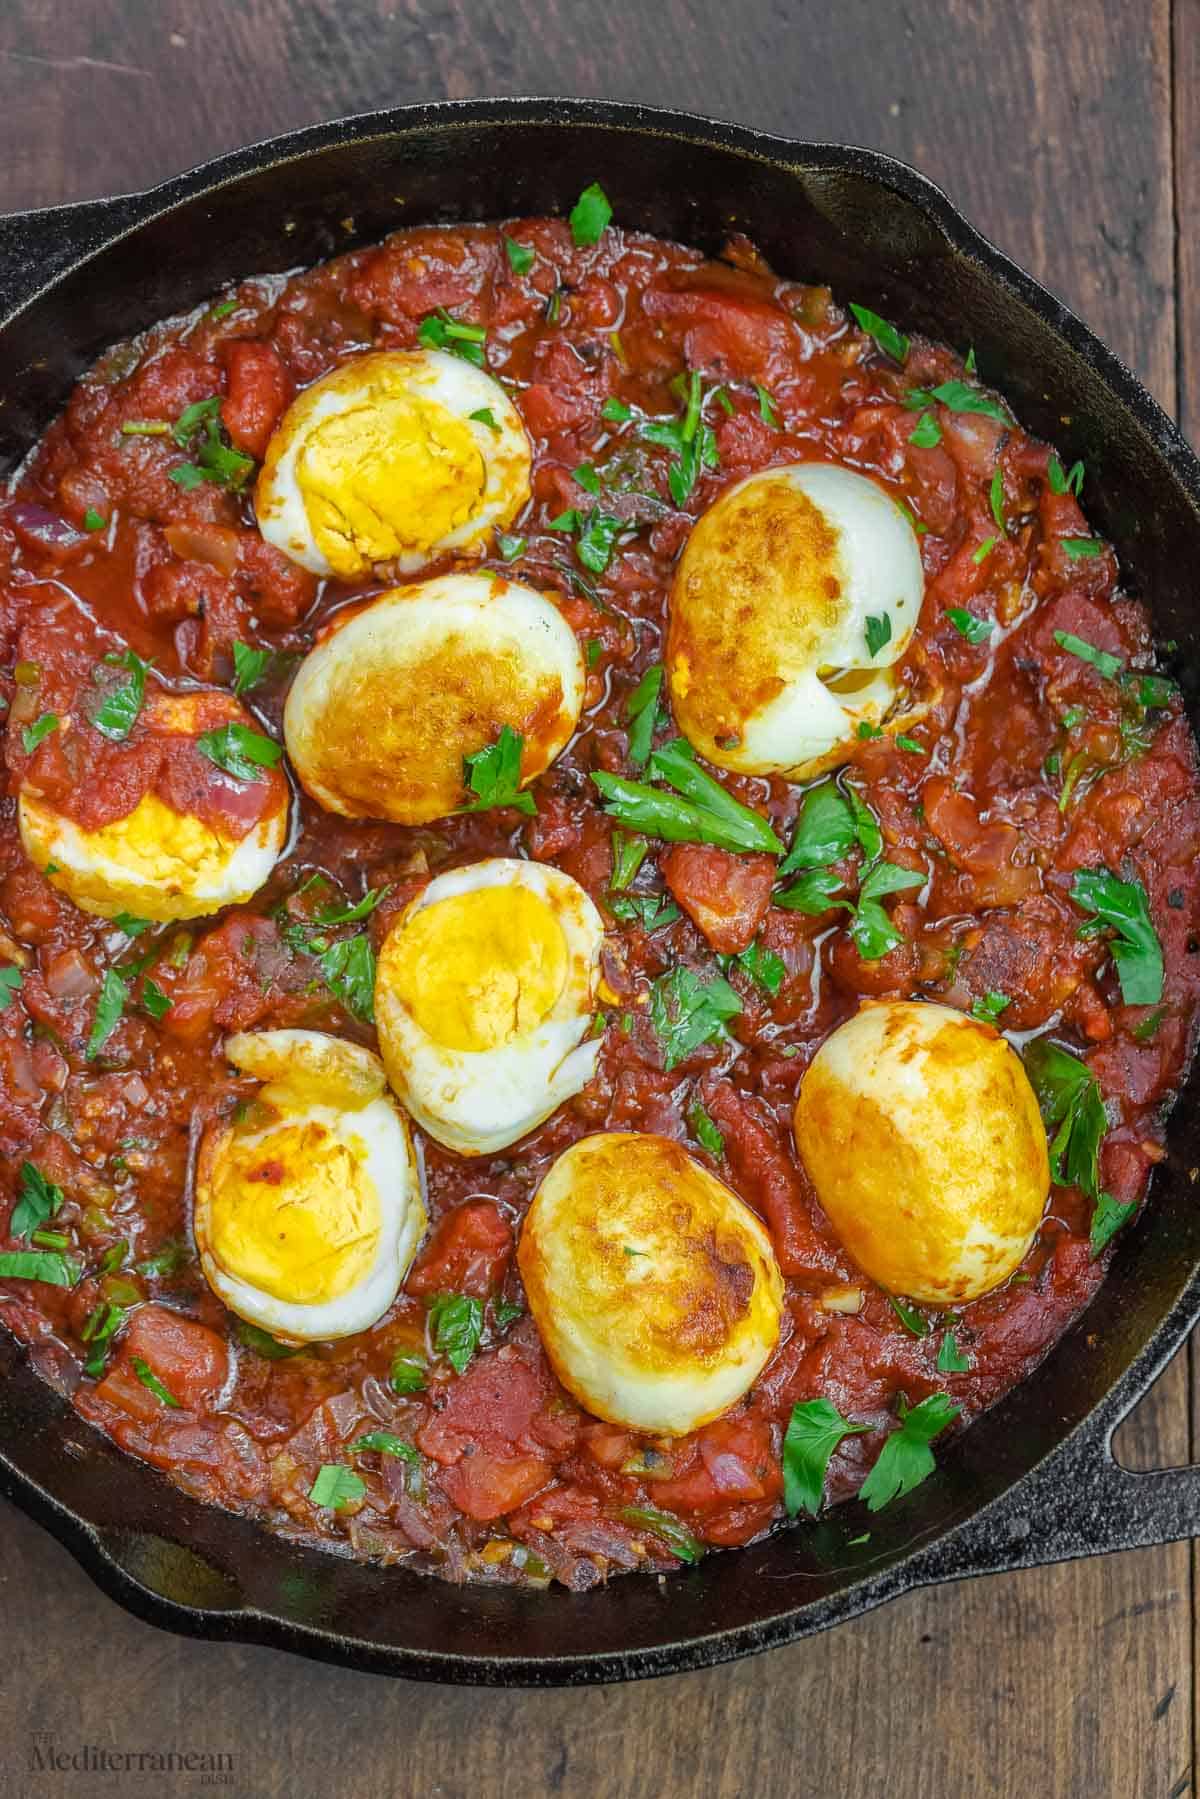 https://www.themediterraneandish.com/wp-content/uploads/2022/07/eggs-fra-diavolo-in-purgatory-recipe-2.jpg